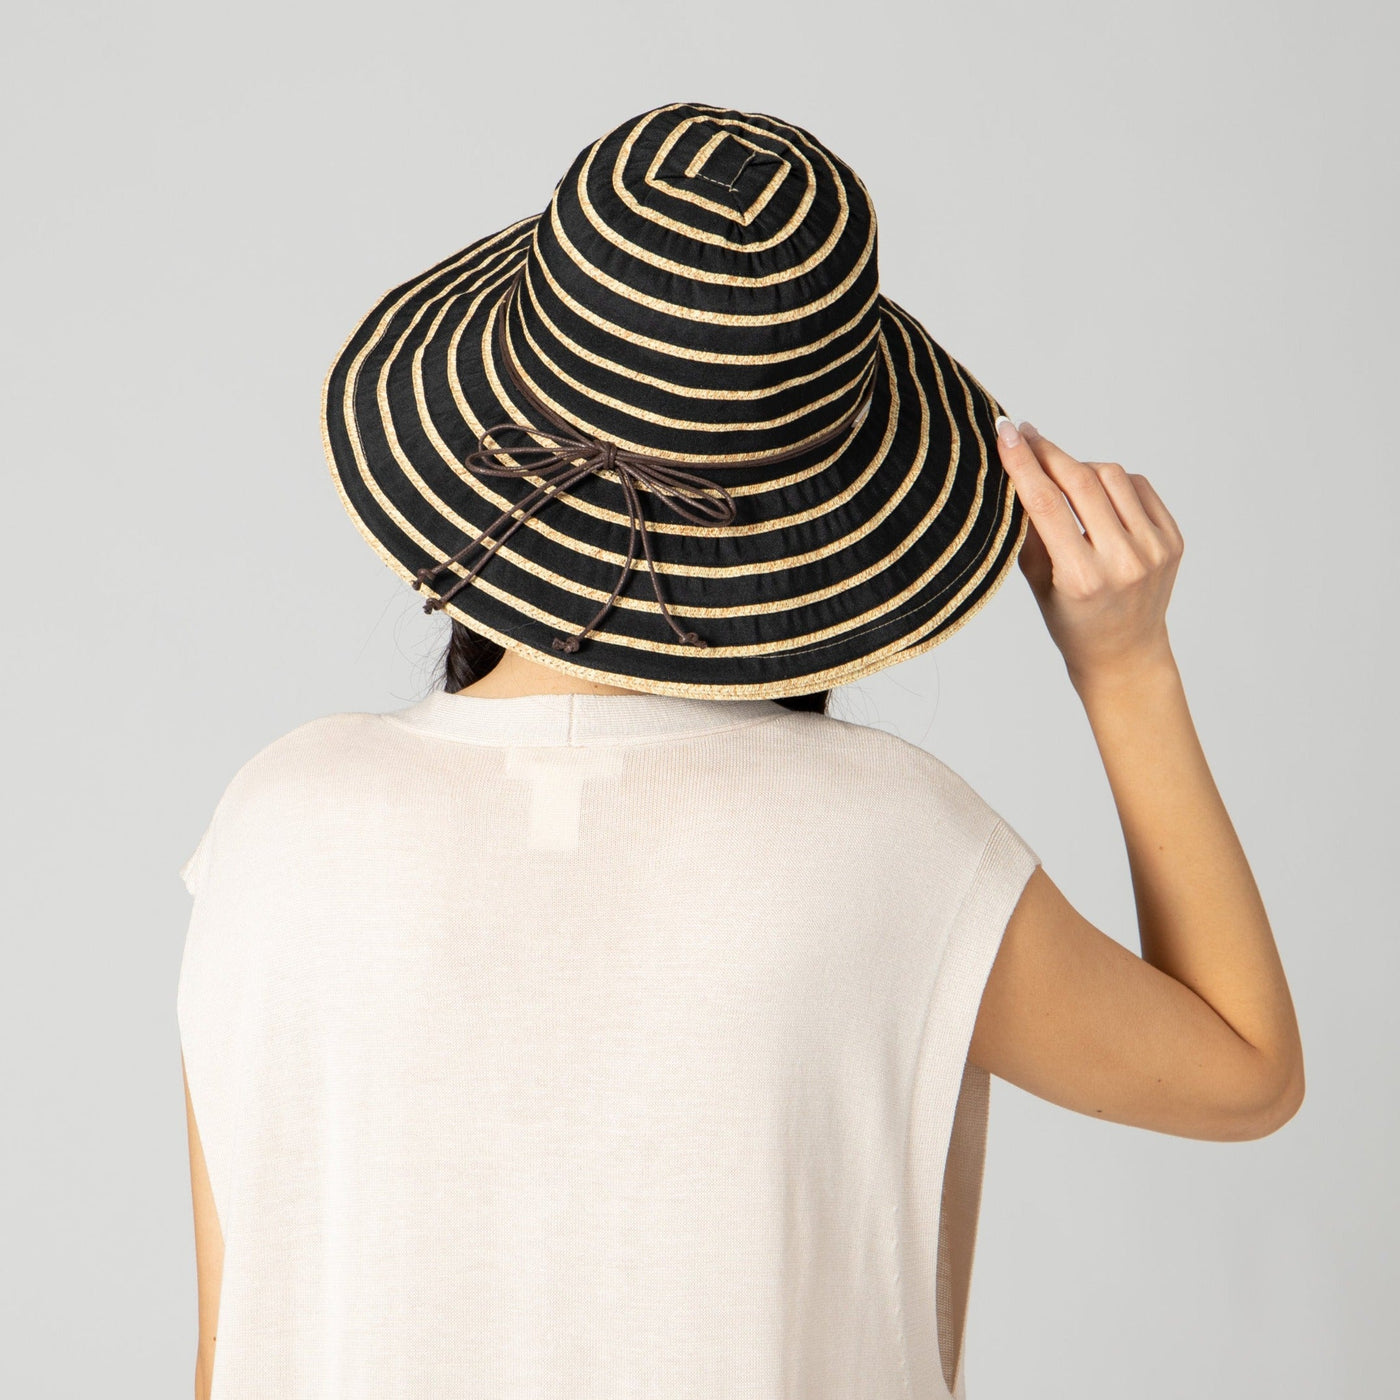 YWDJ Womens Hats with Brim Women Fashion Stripe Print Corduroy